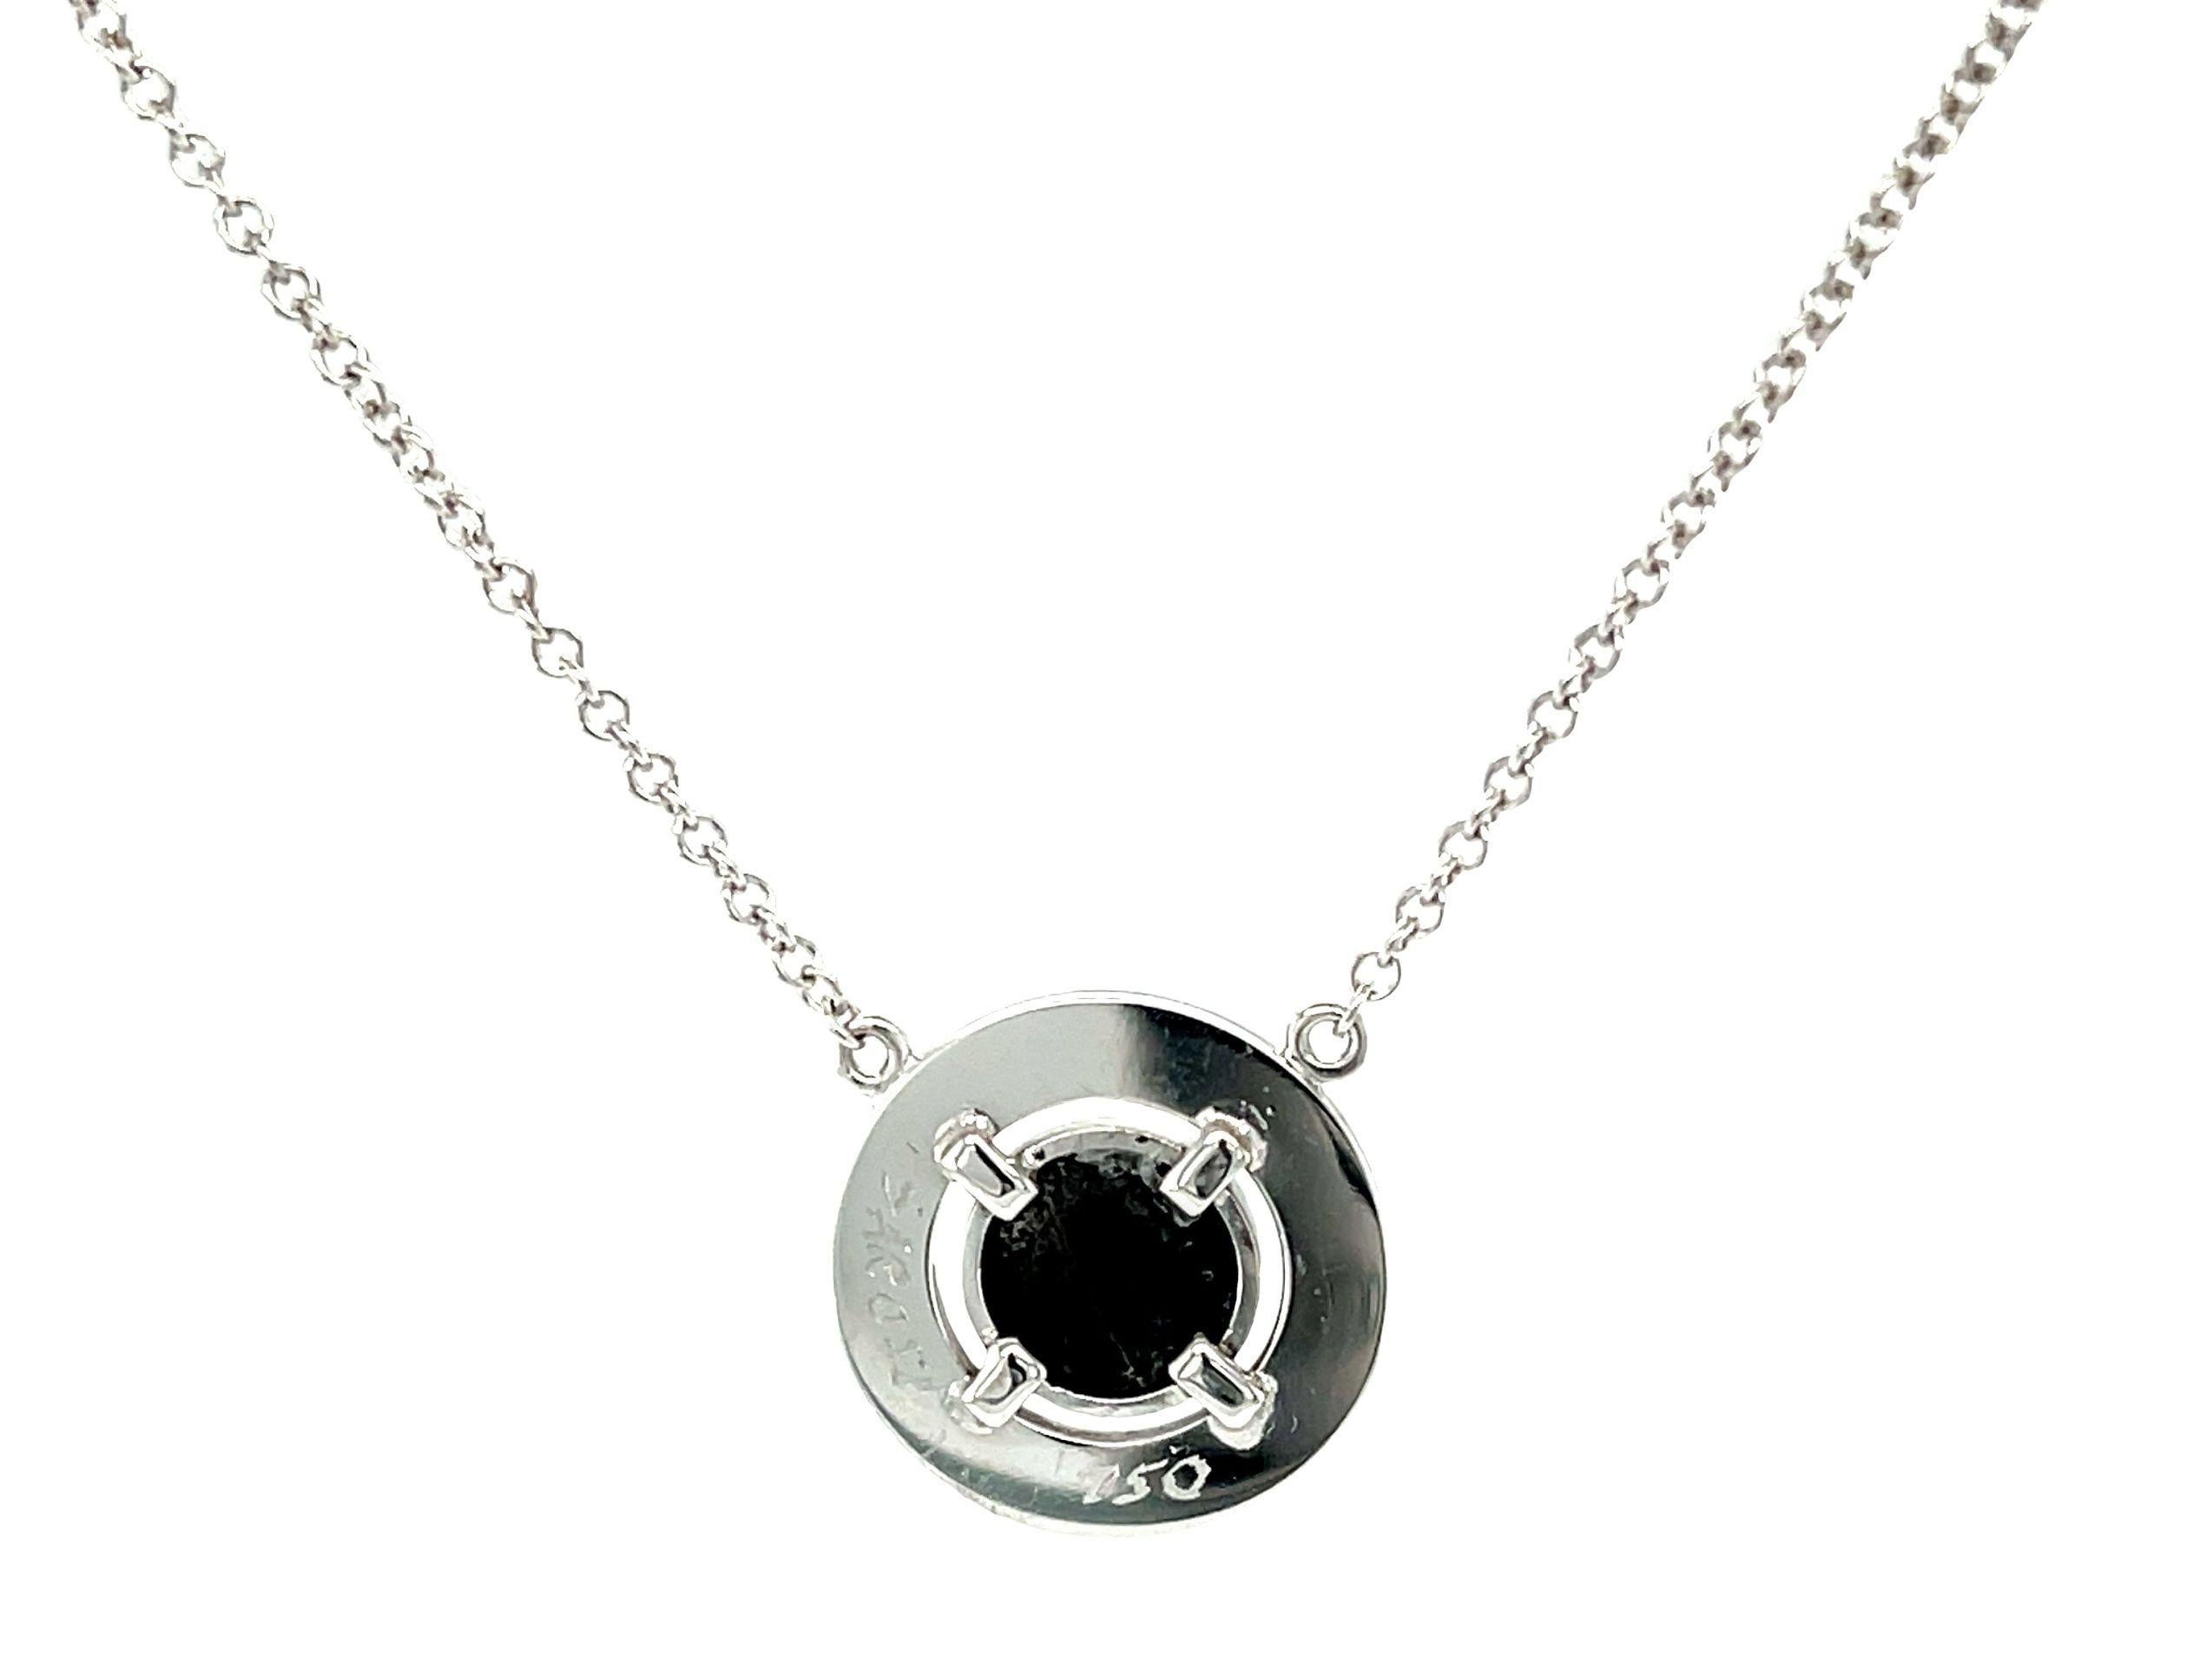 Artisan Rose Cut Black Diamond Necklace in 18k White Gold, 1.33 Carat For Sale